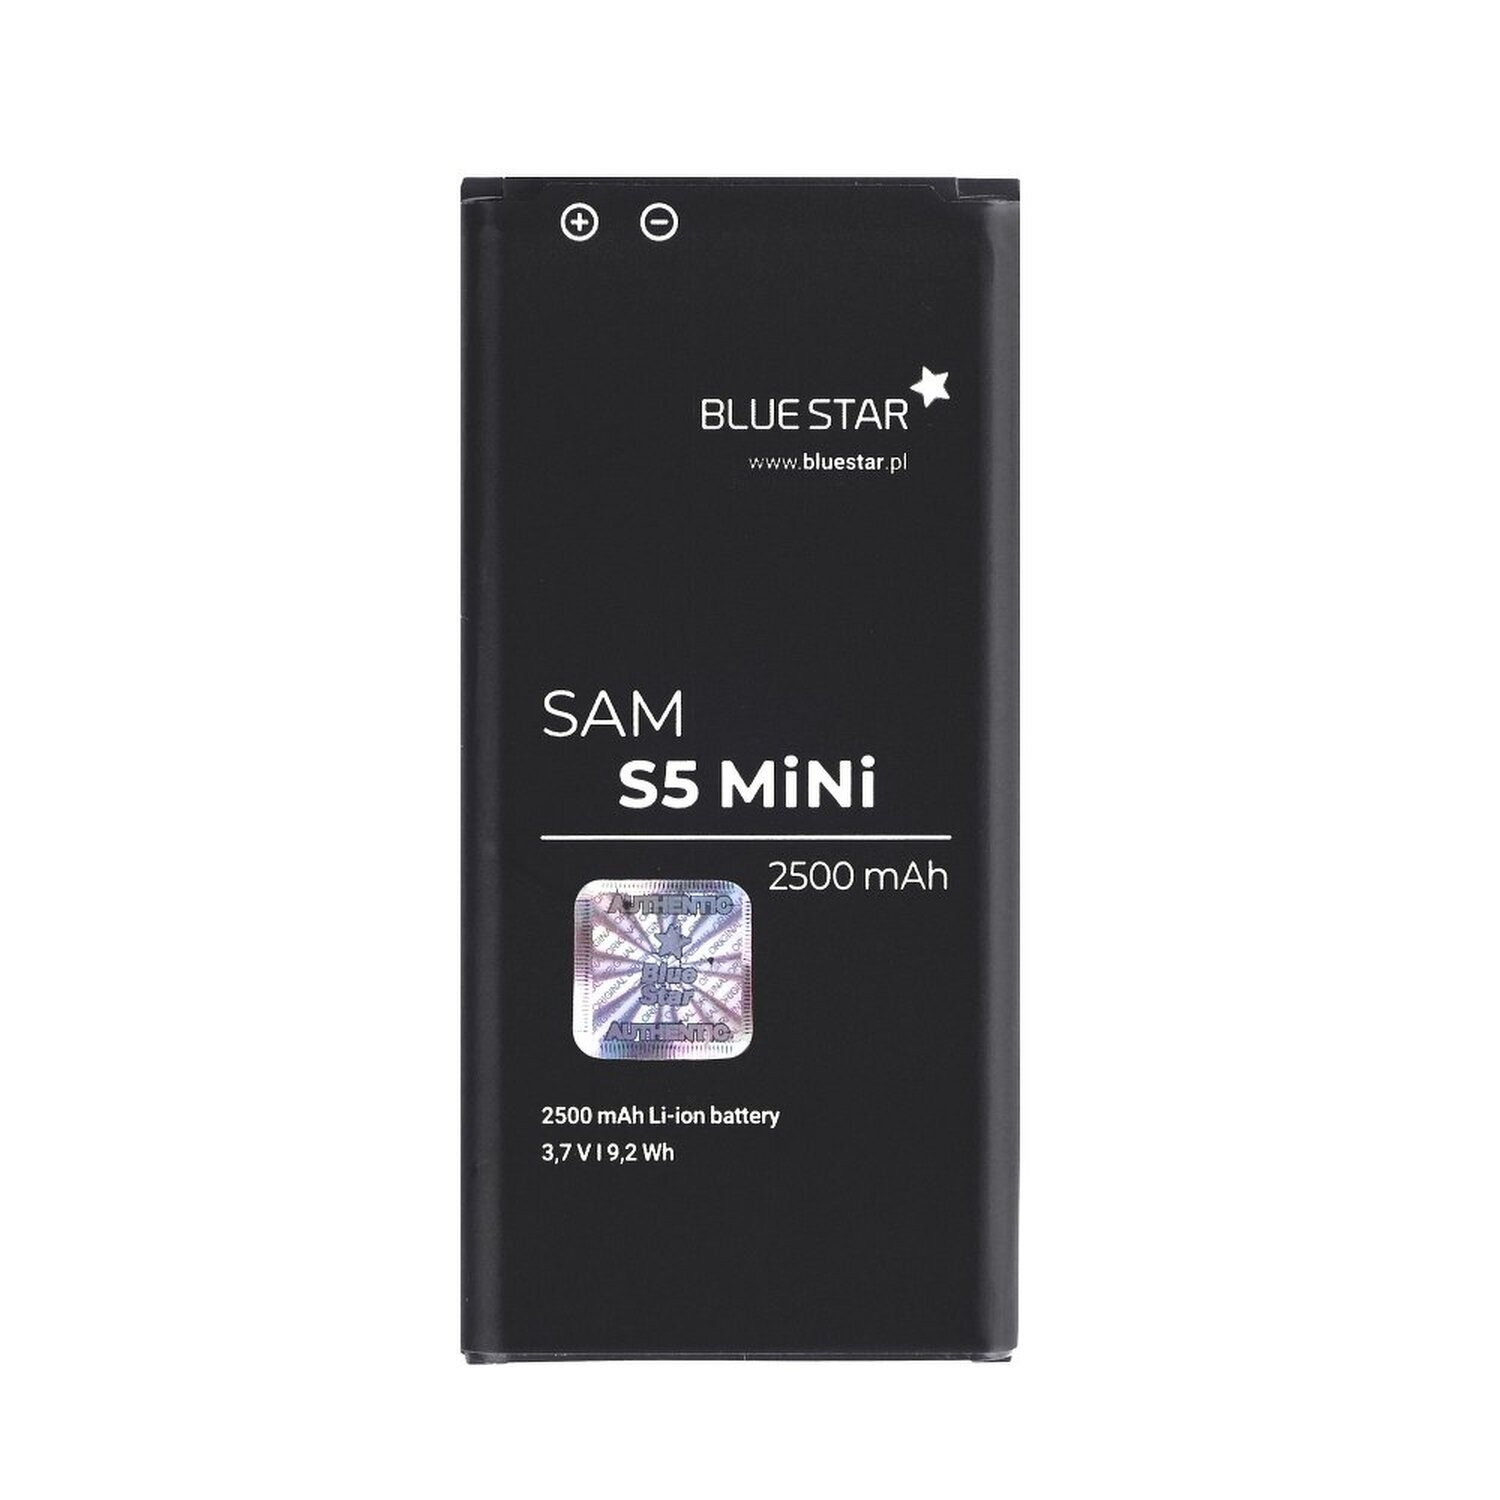 Mini S5 für Li-Ion Samsung Galaxy BLUESTAR Akku Handyakku